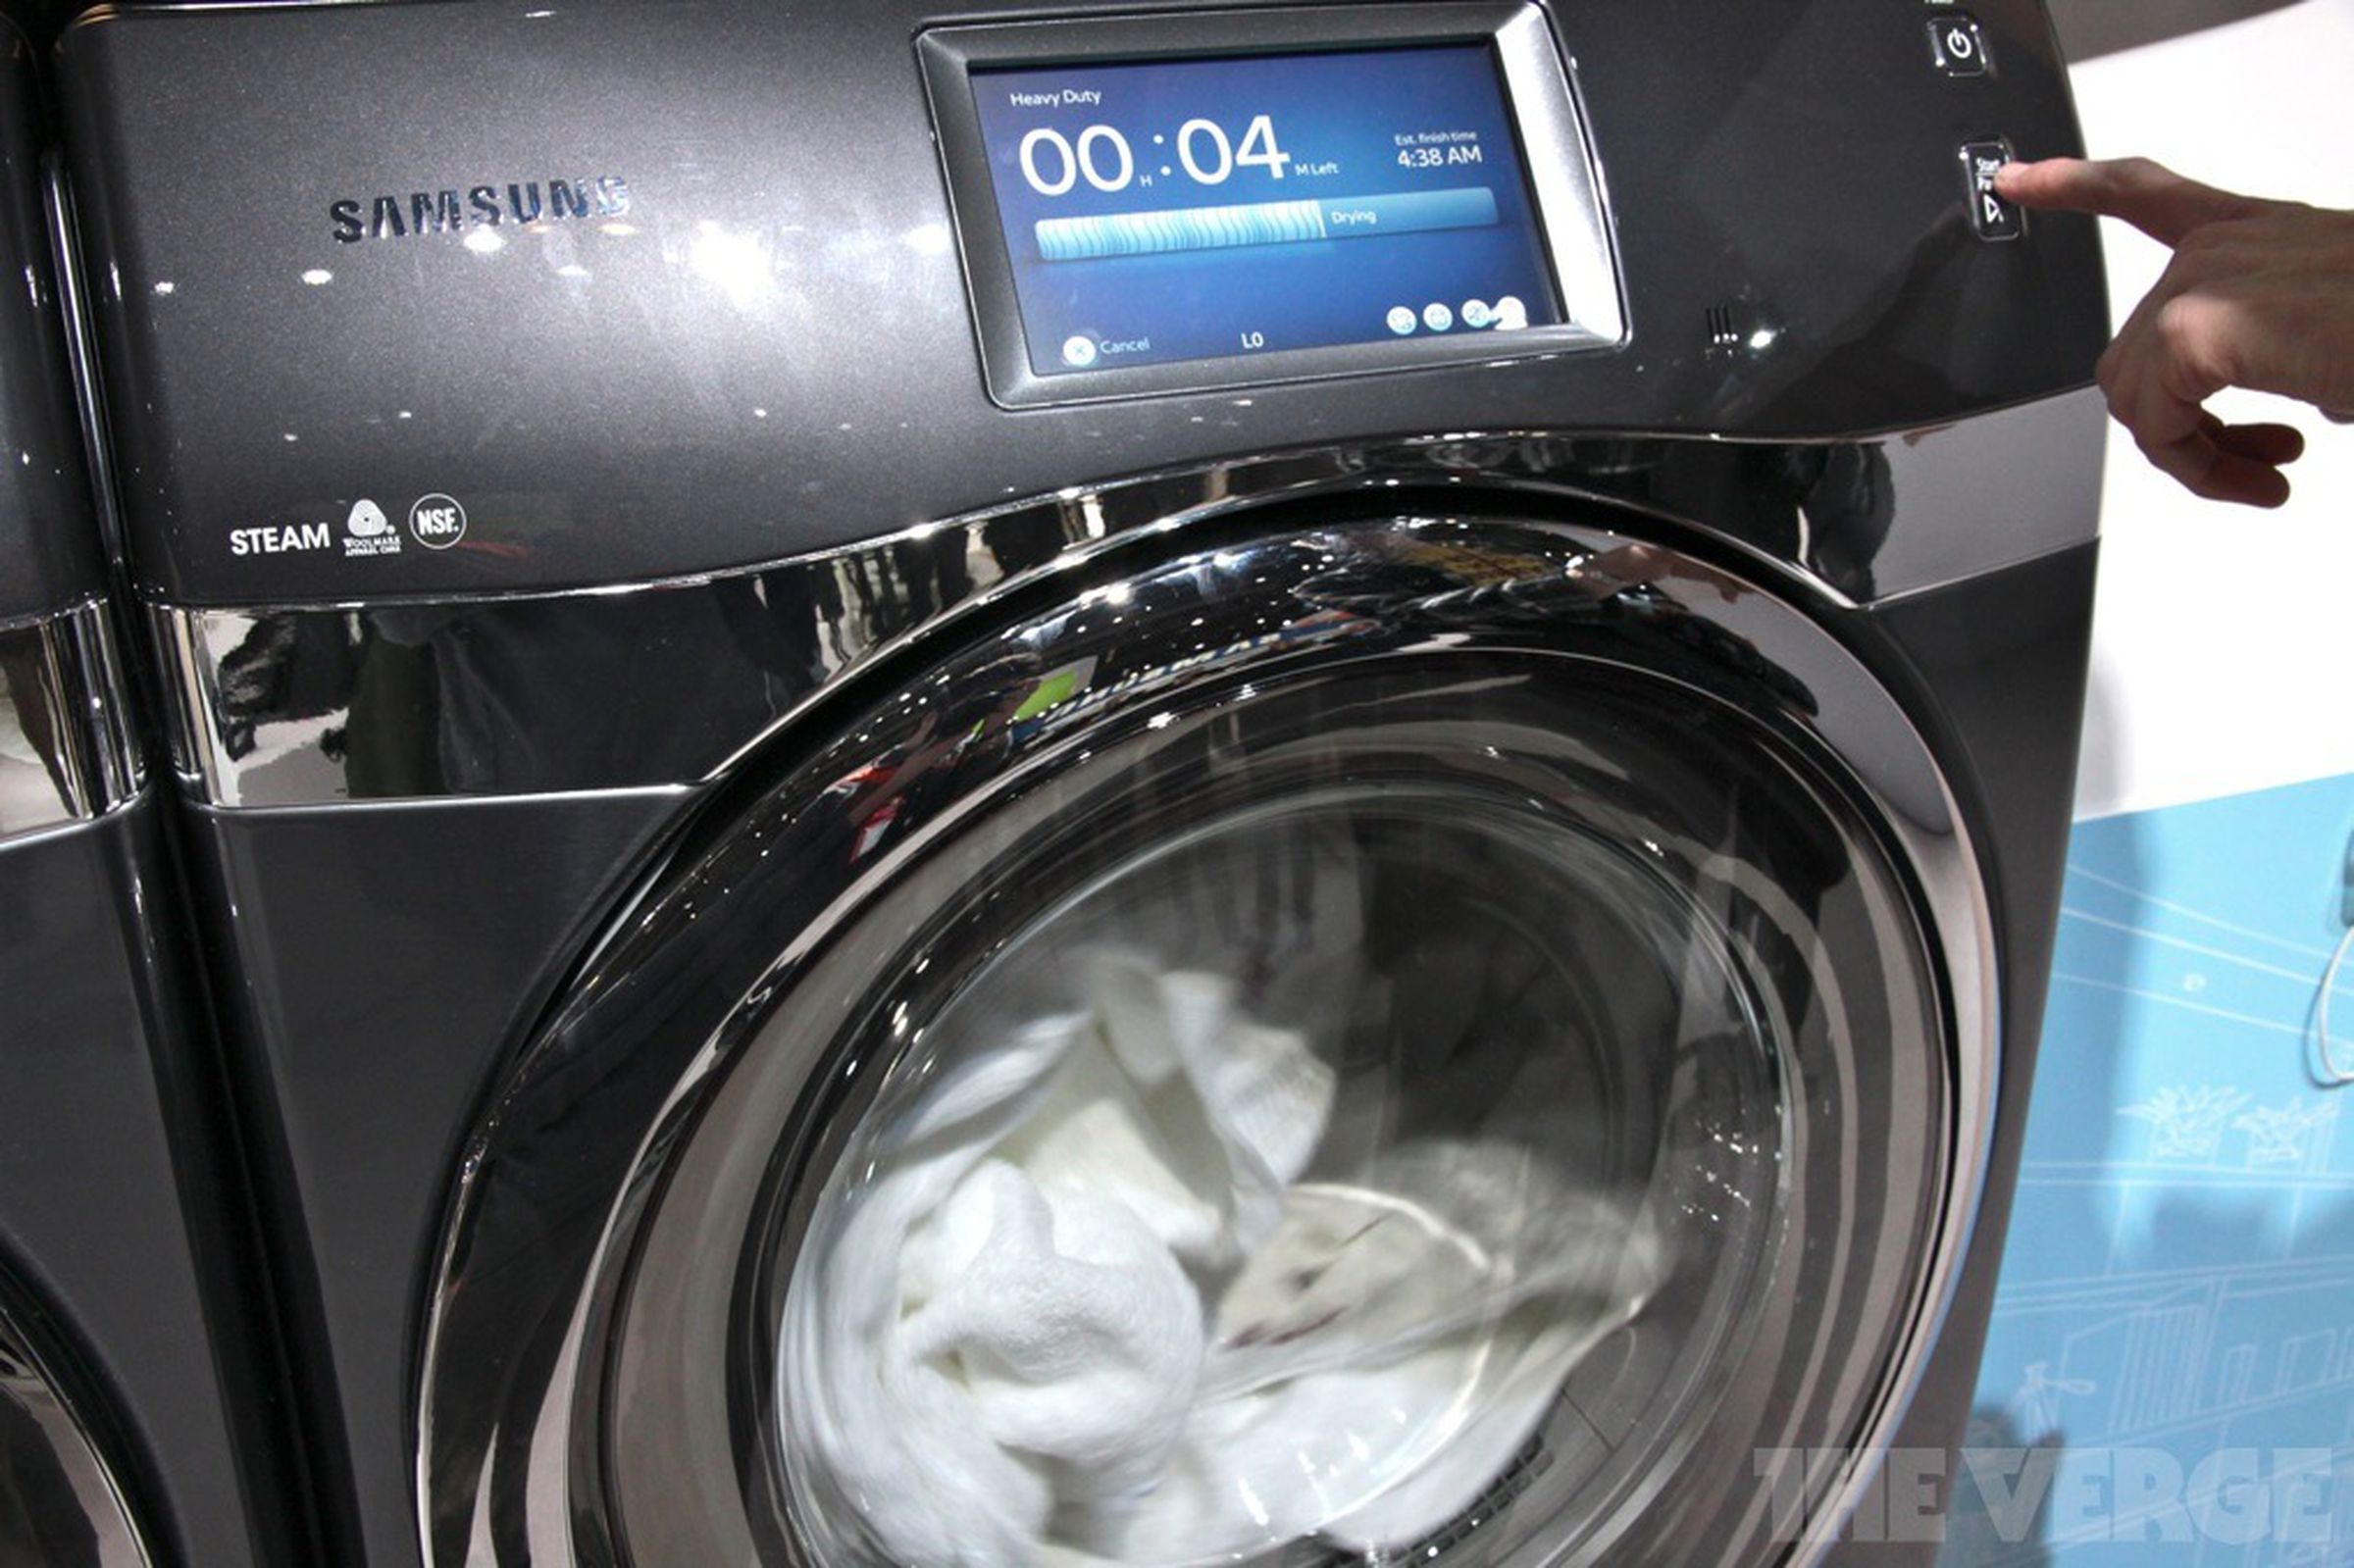 Samsung WF457 Wi-Fi washing machine hands-on photos